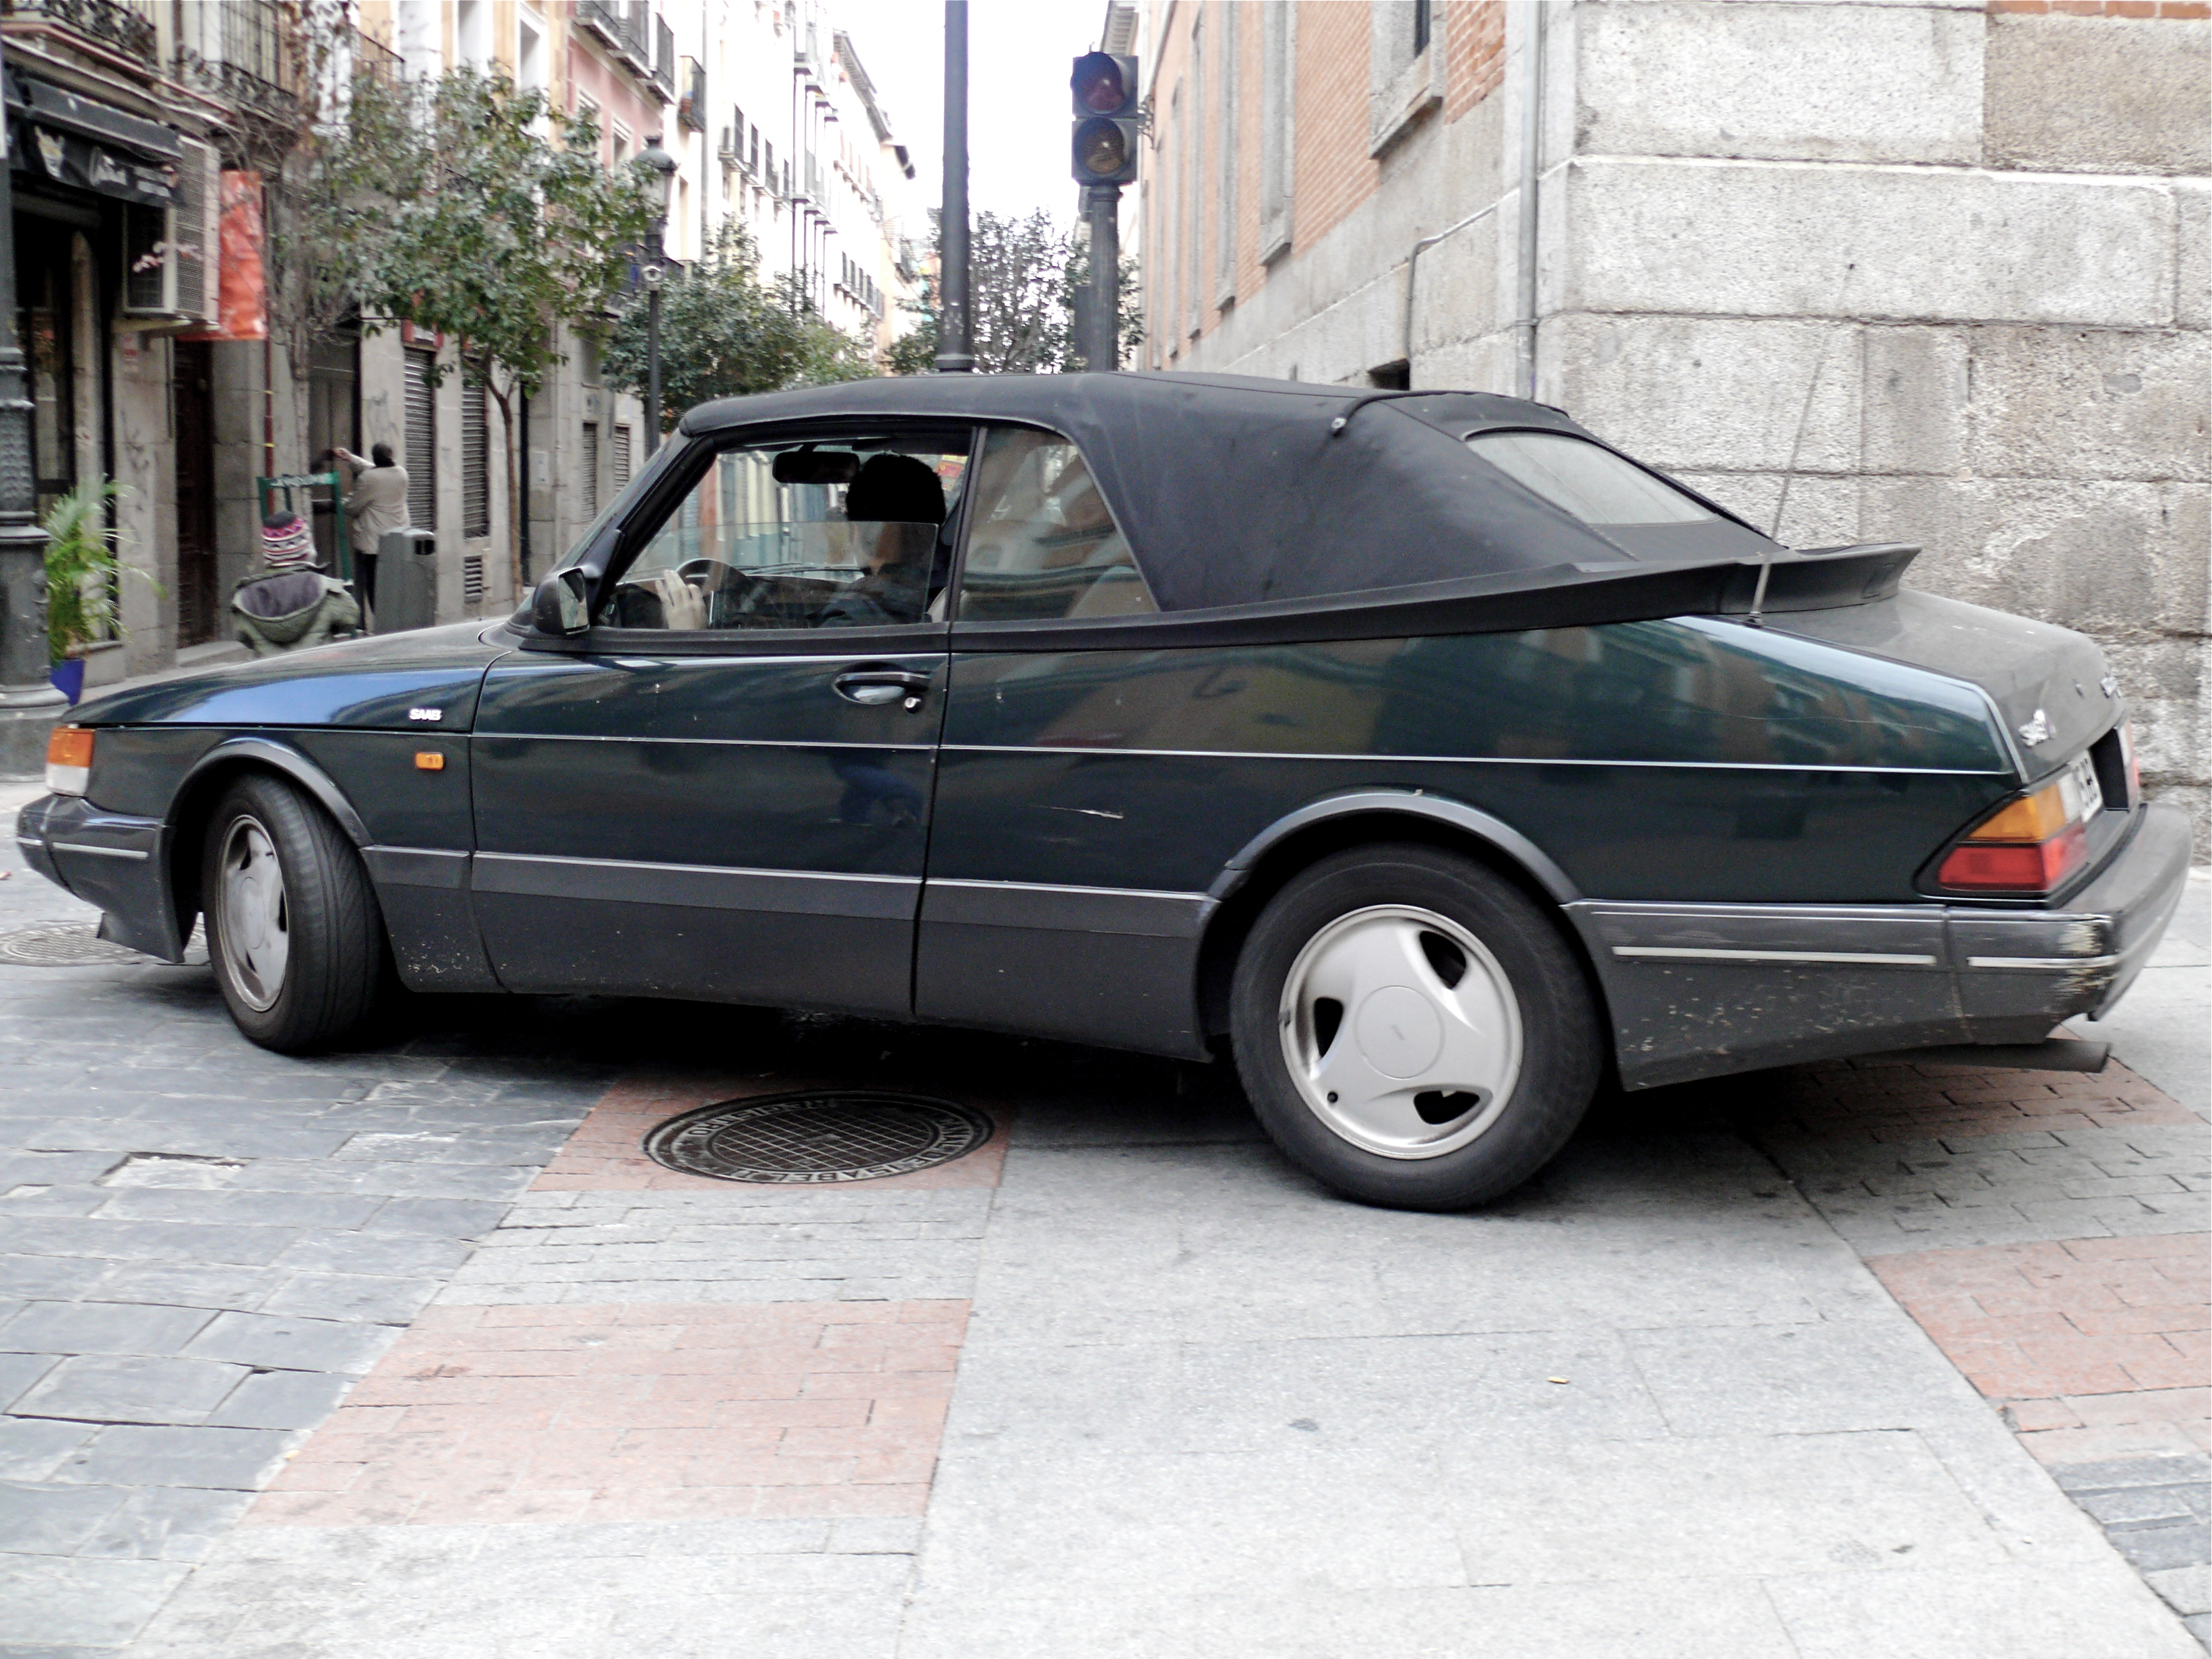 Saab 900 turbo cabrio | Flickr - Photo Sharing!